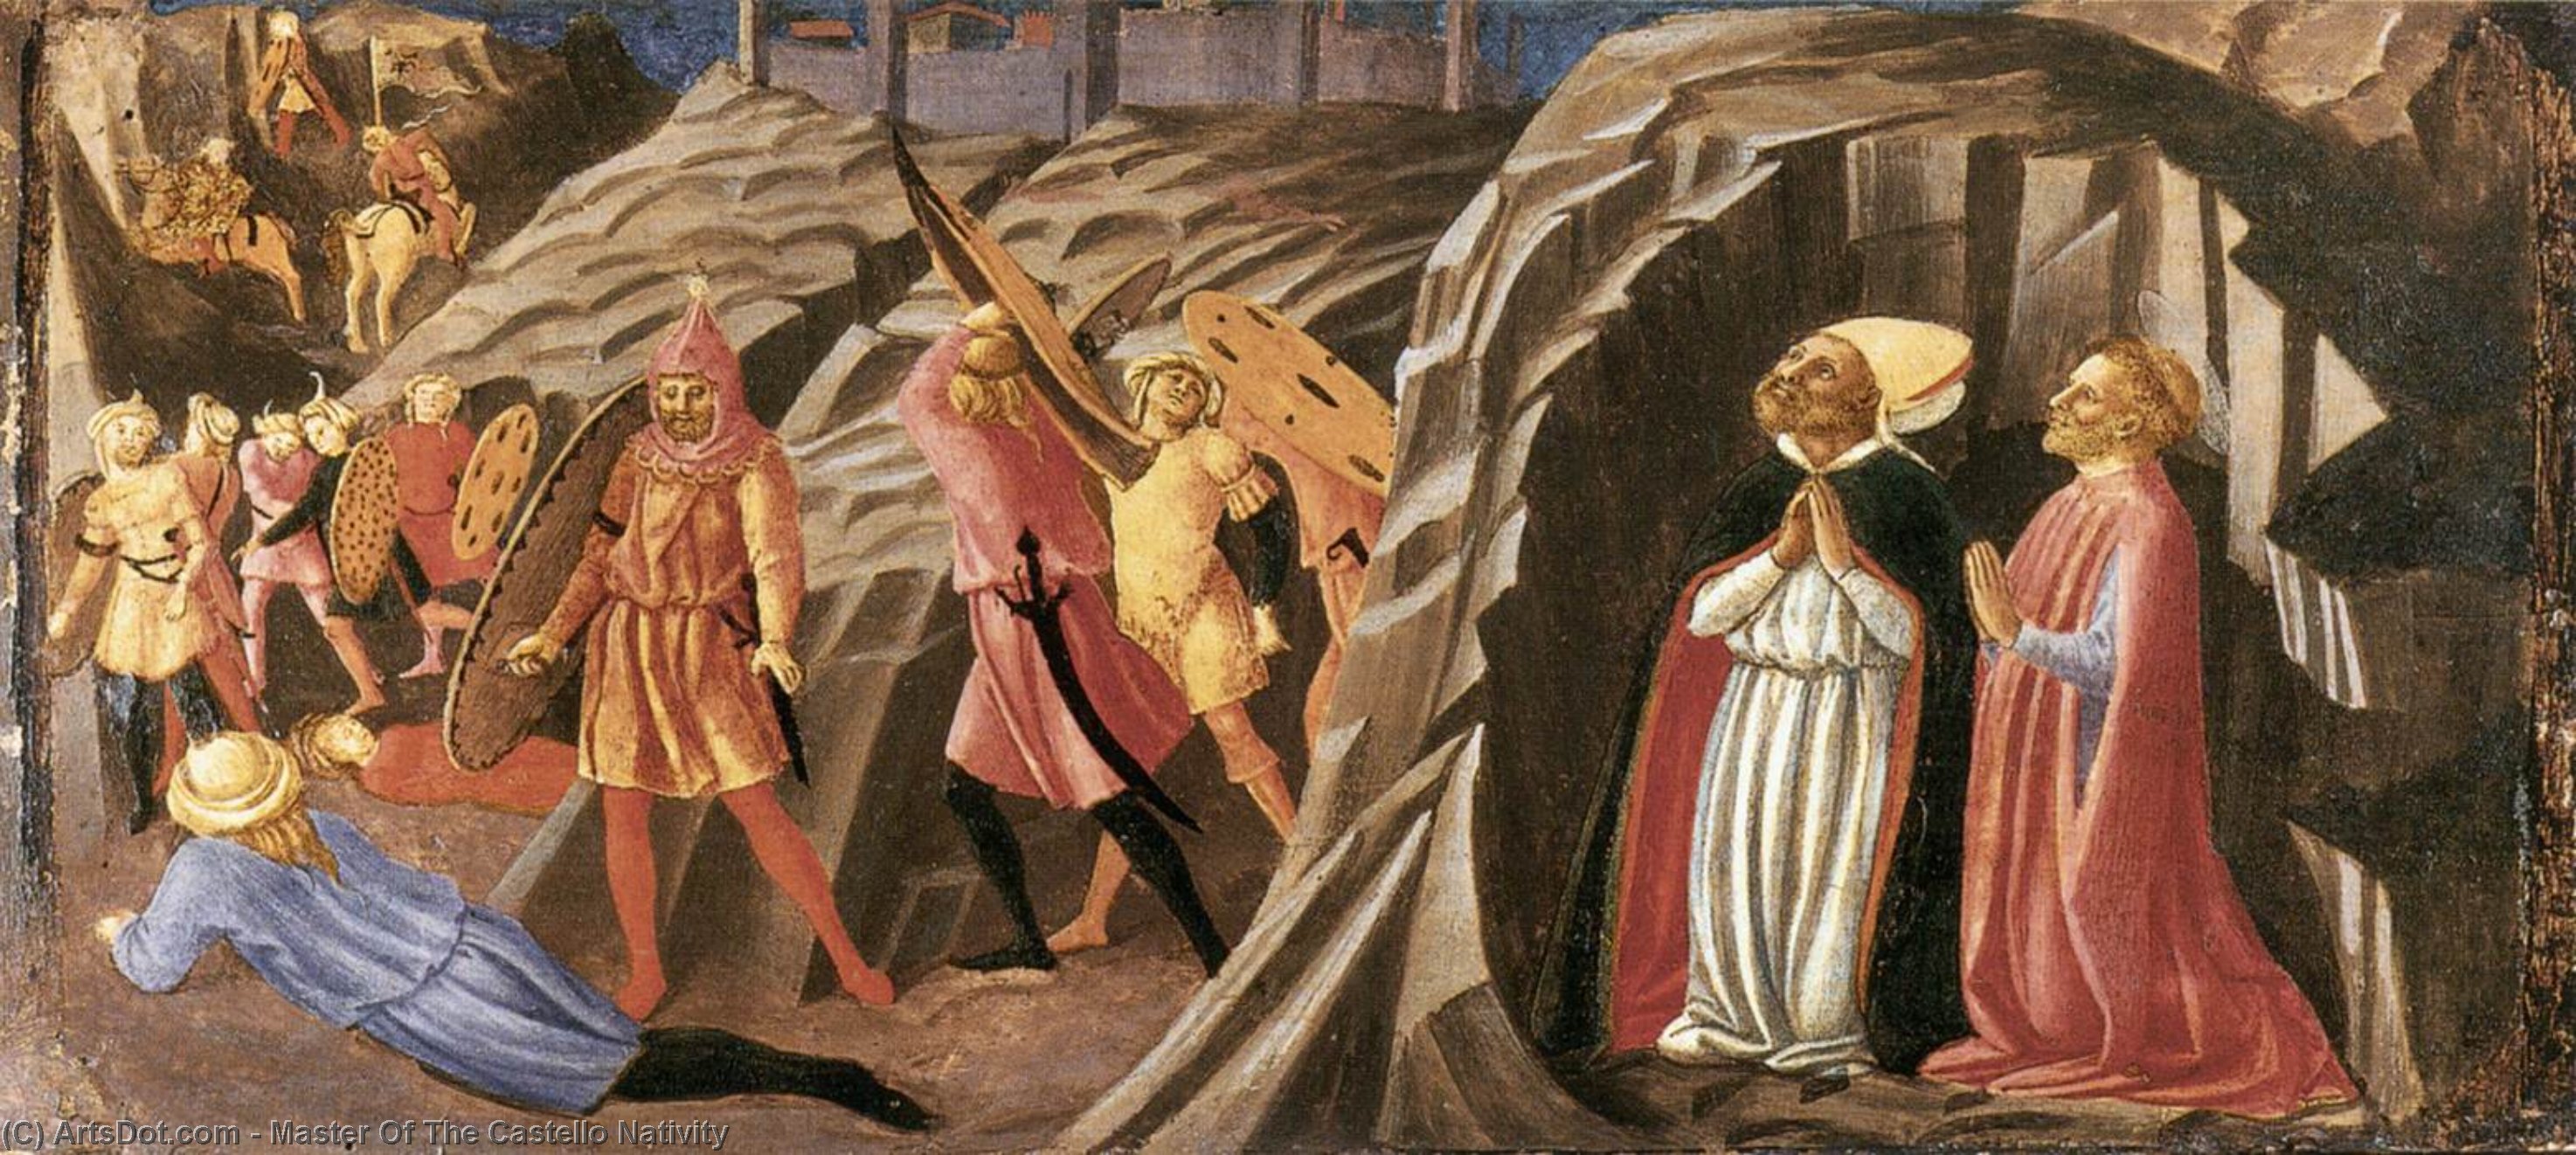 Wikioo.org - Bách khoa toàn thư về mỹ thuật - Vẽ tranh, Tác phẩm nghệ thuật Master Of The Castello Nativity - Sts Justus and Clement Praying for Deliverance from the Vandals